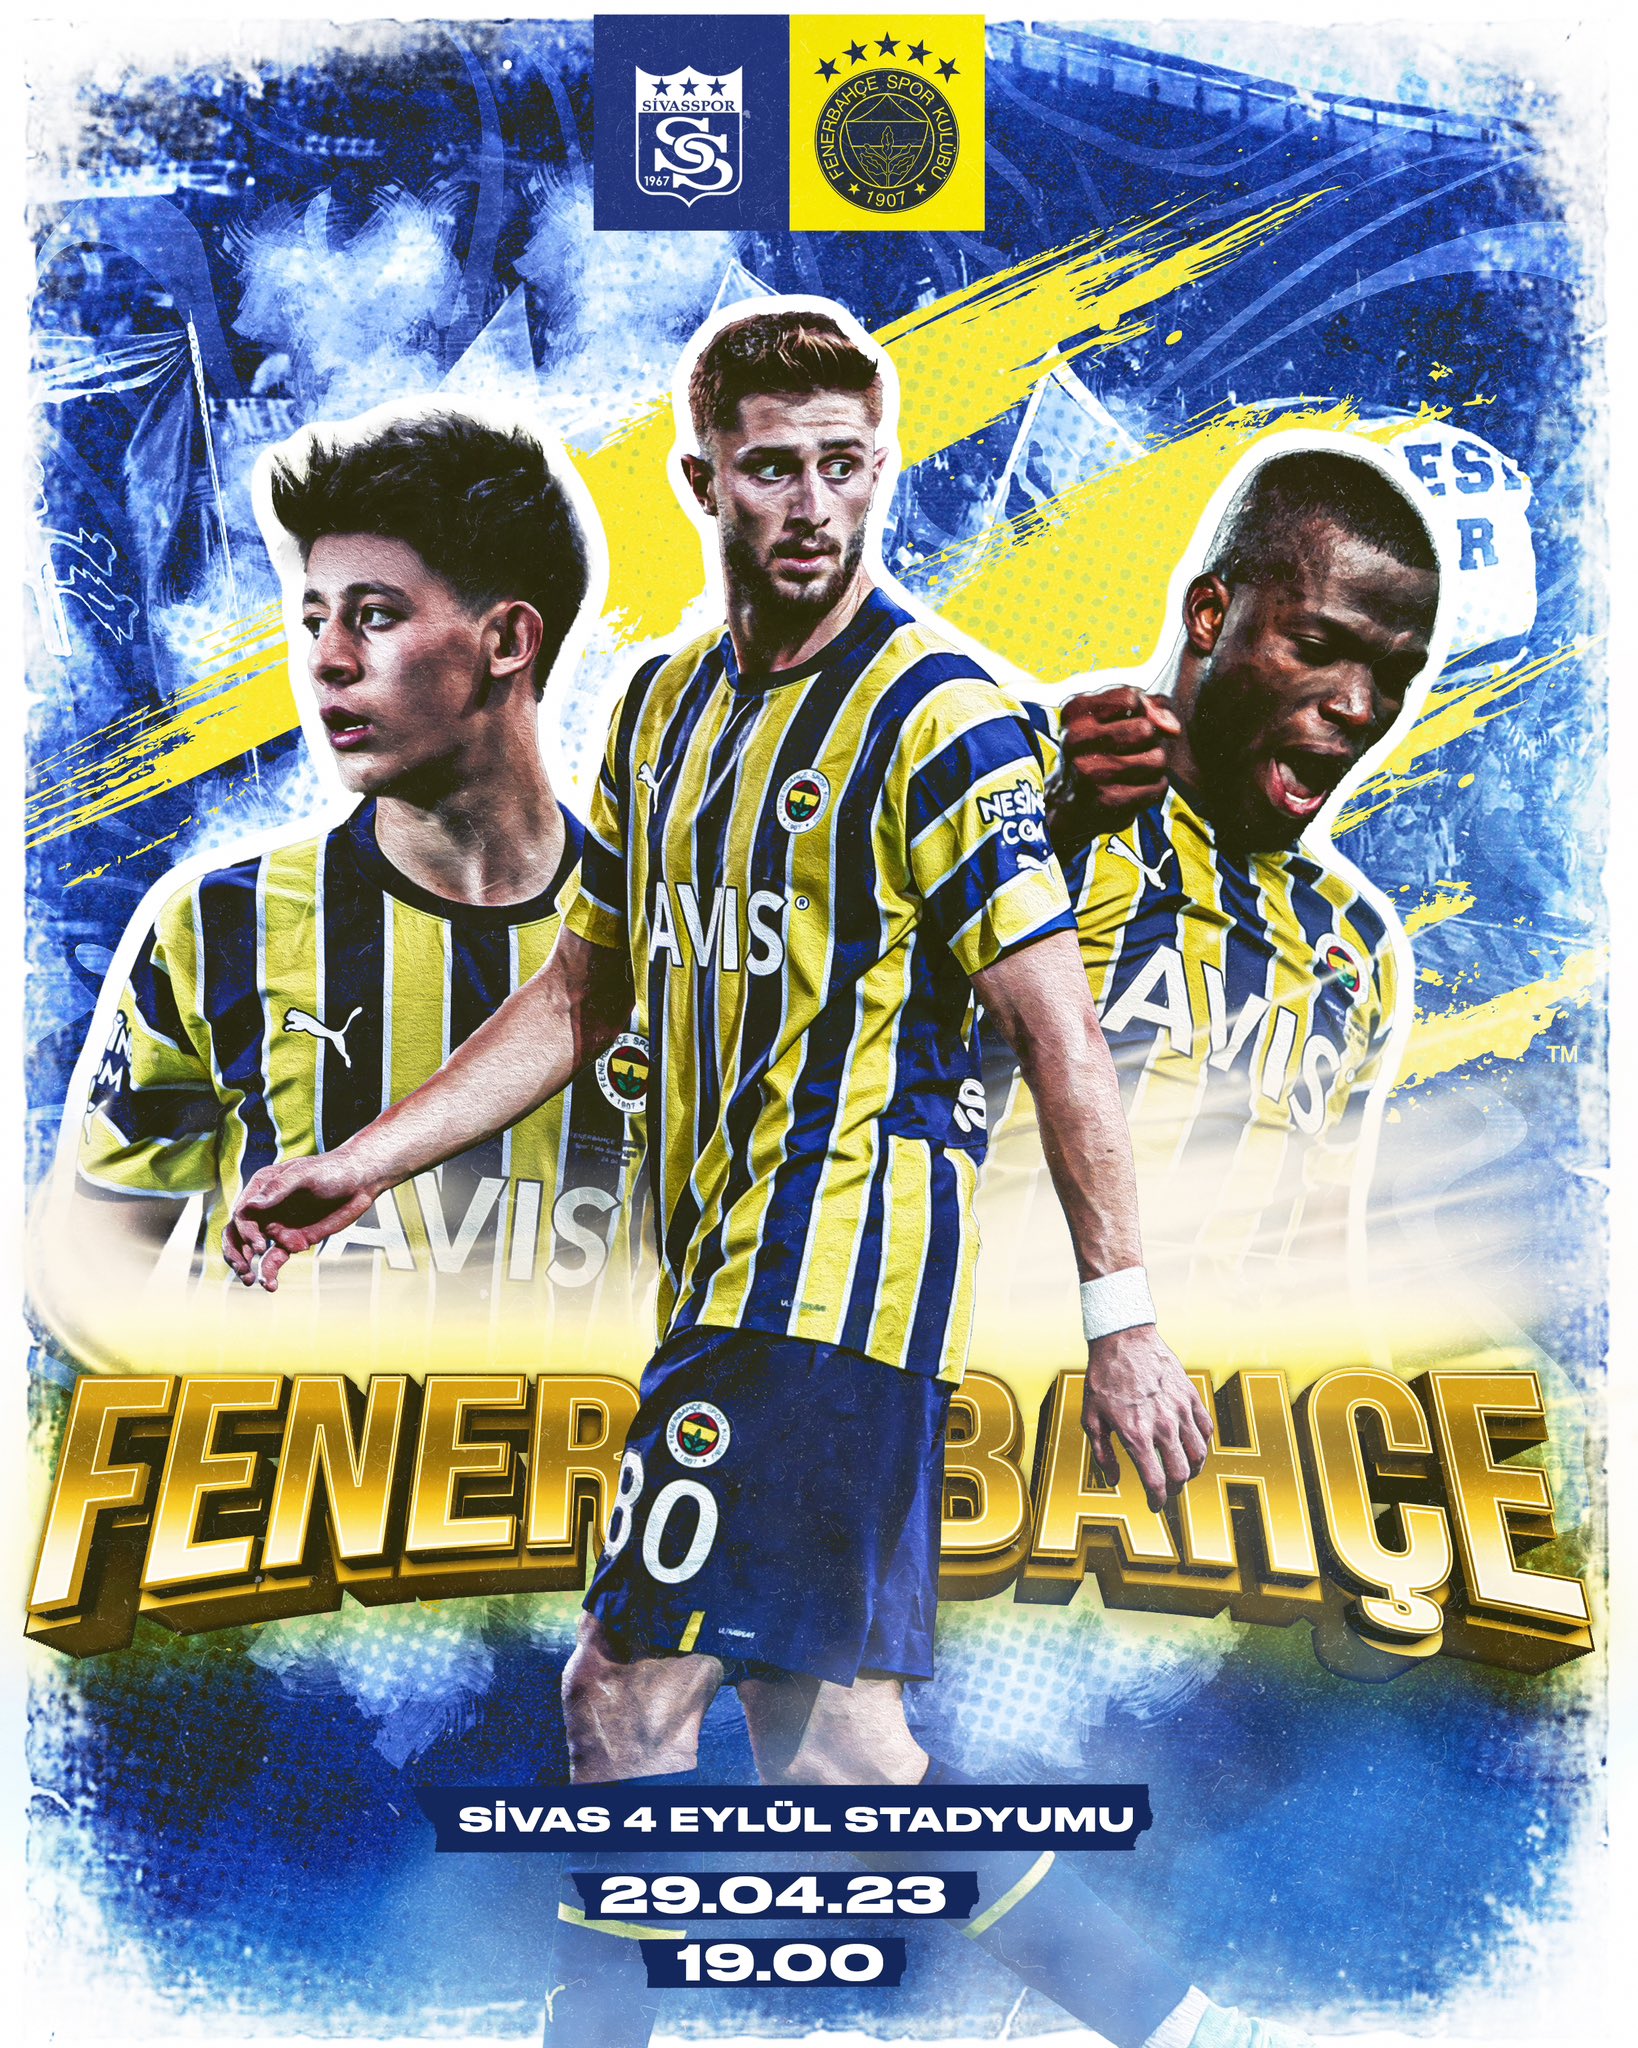 Fenerbahçe vs Karagümrük: An Exciting Matchup in Turkish Football